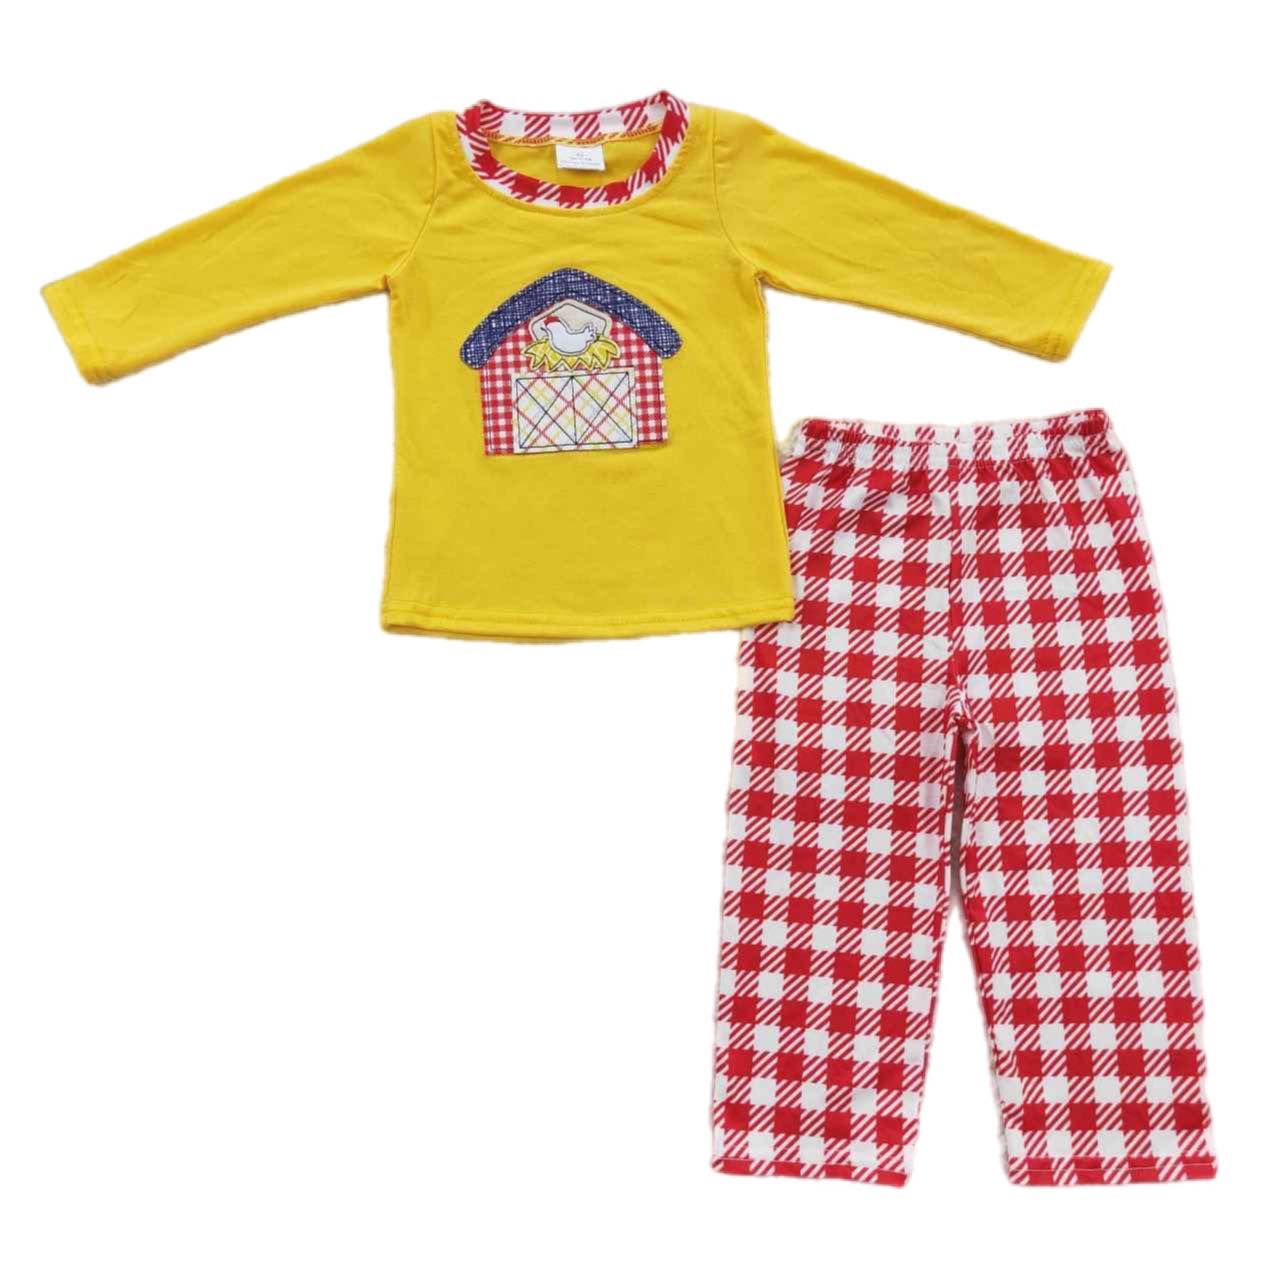 ᴡᴇᴇᴋʟʏ ᴘʀᴇ ᴏʀᴅᴇʀ Embroidered Barn Pants Set